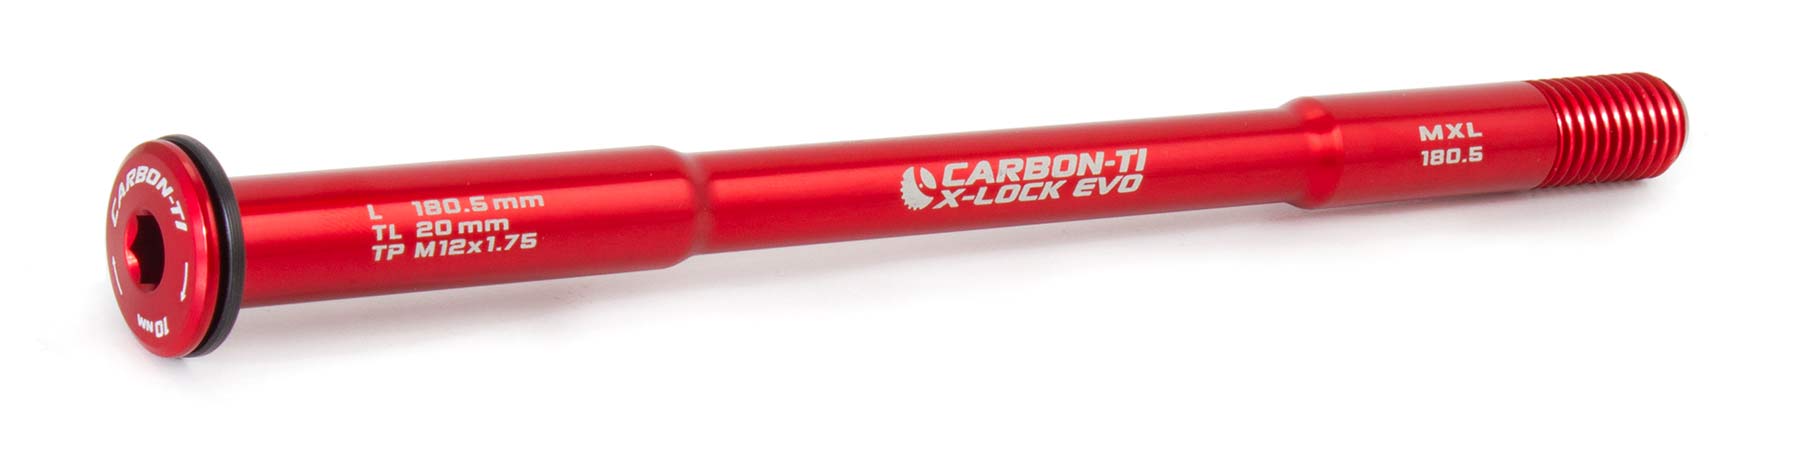 Carbon-Ti X-Lock Evo thru axles, lightweight 7075 alloy bolt-on replacement thru-axles, tapered